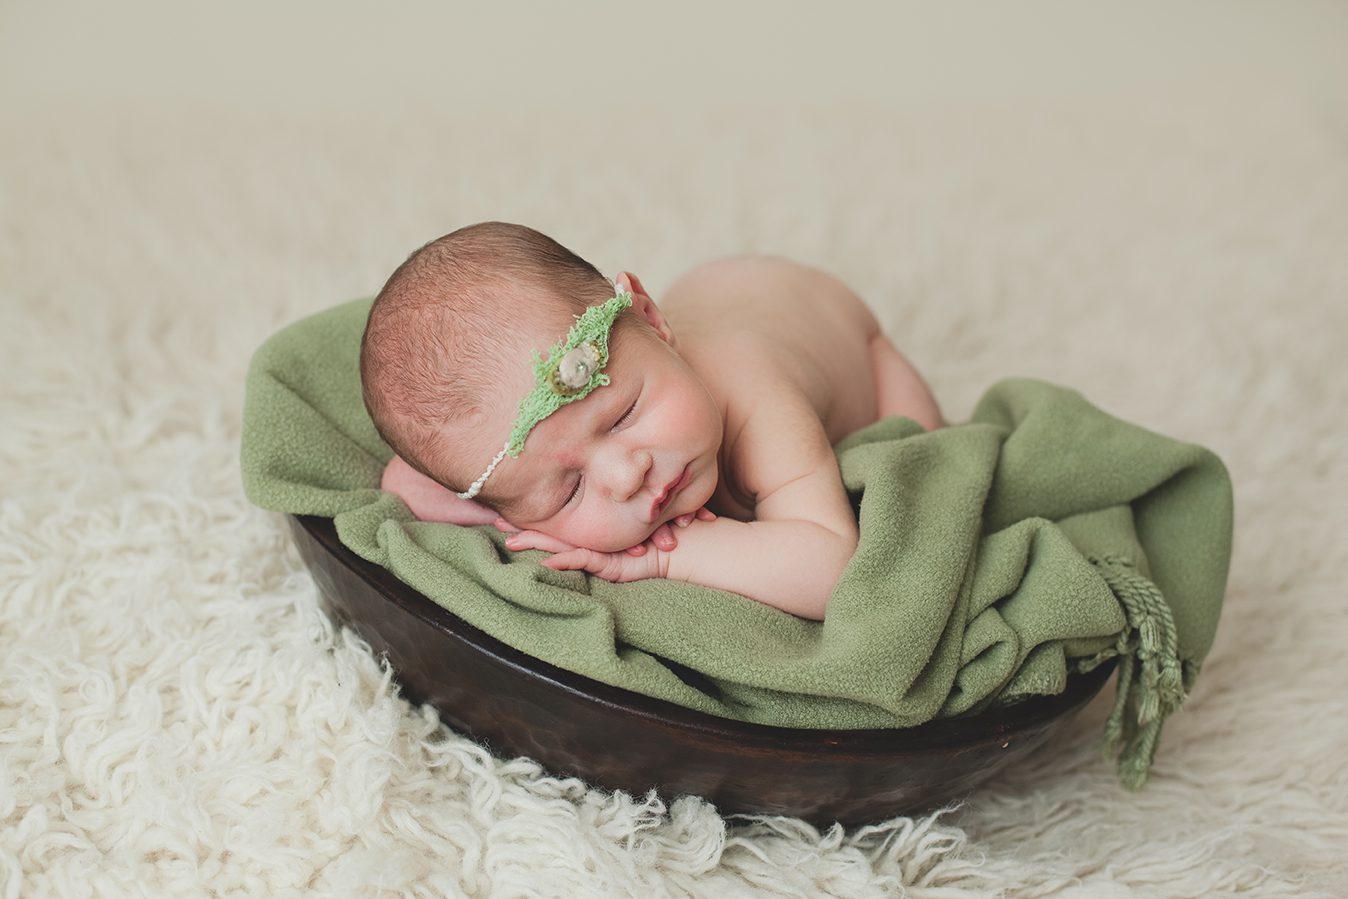 edmonton newborn photographer of baby on green blanket in bowl